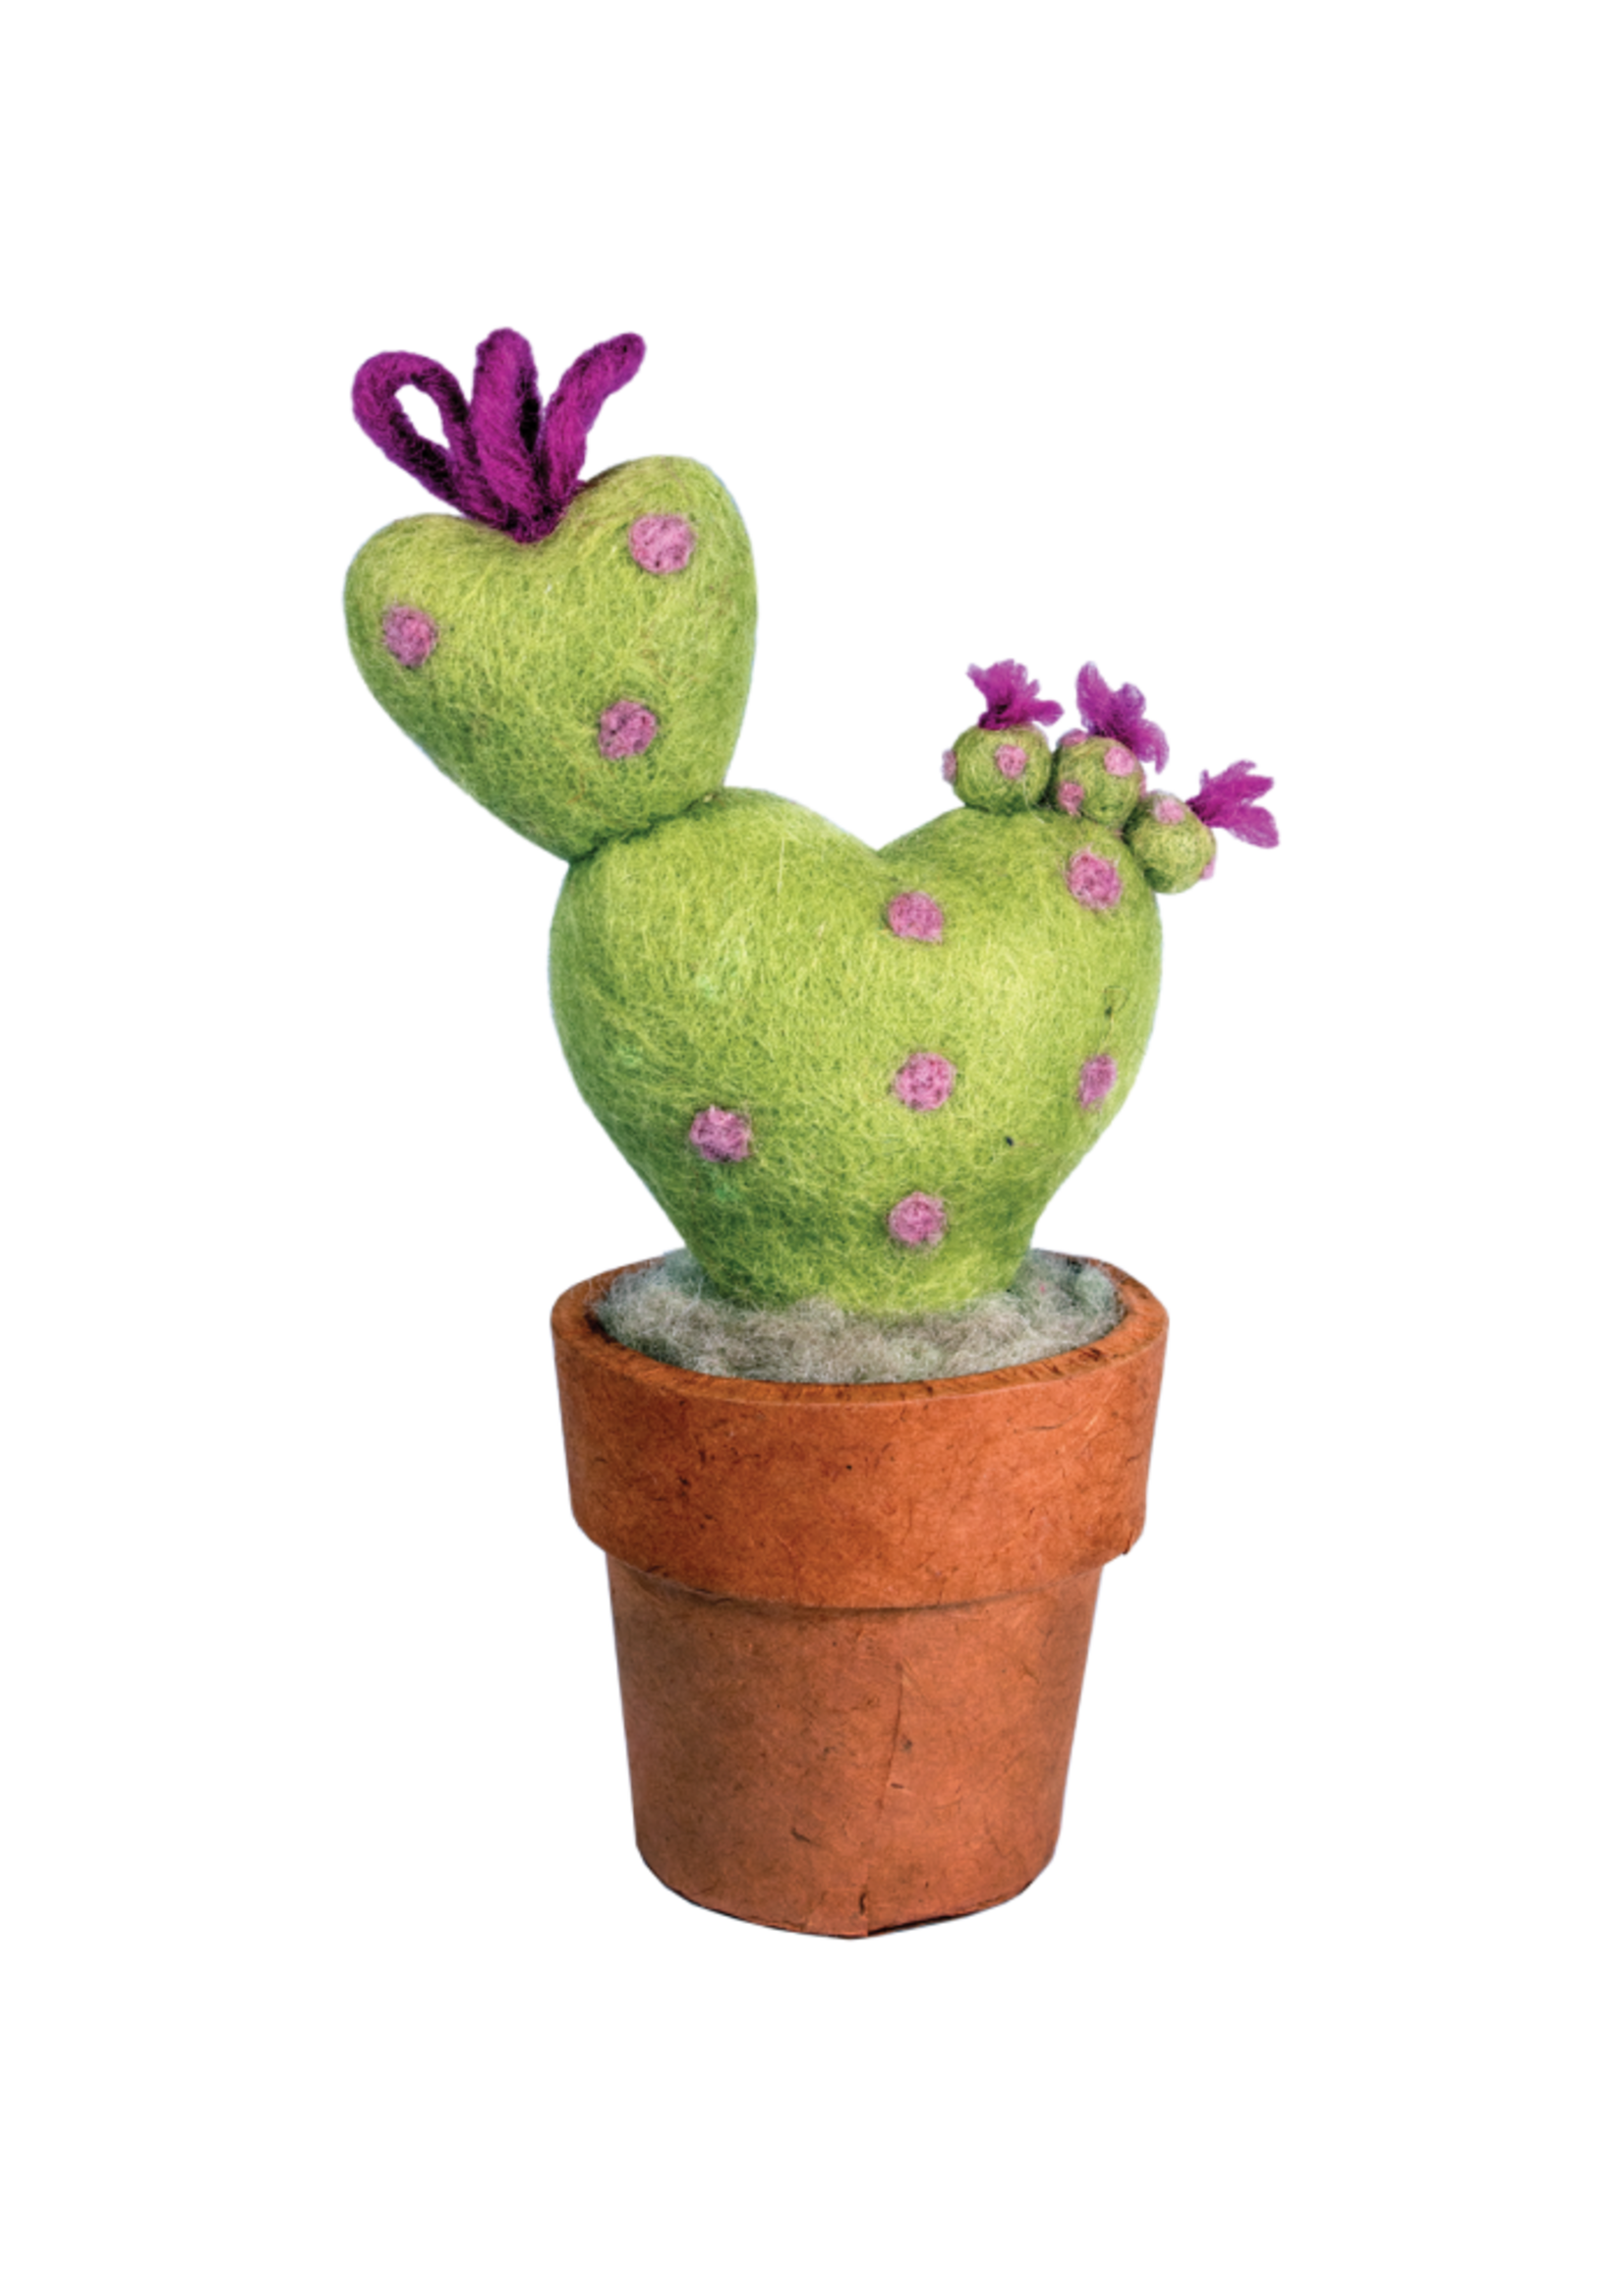 Felt Cactus - Small Love